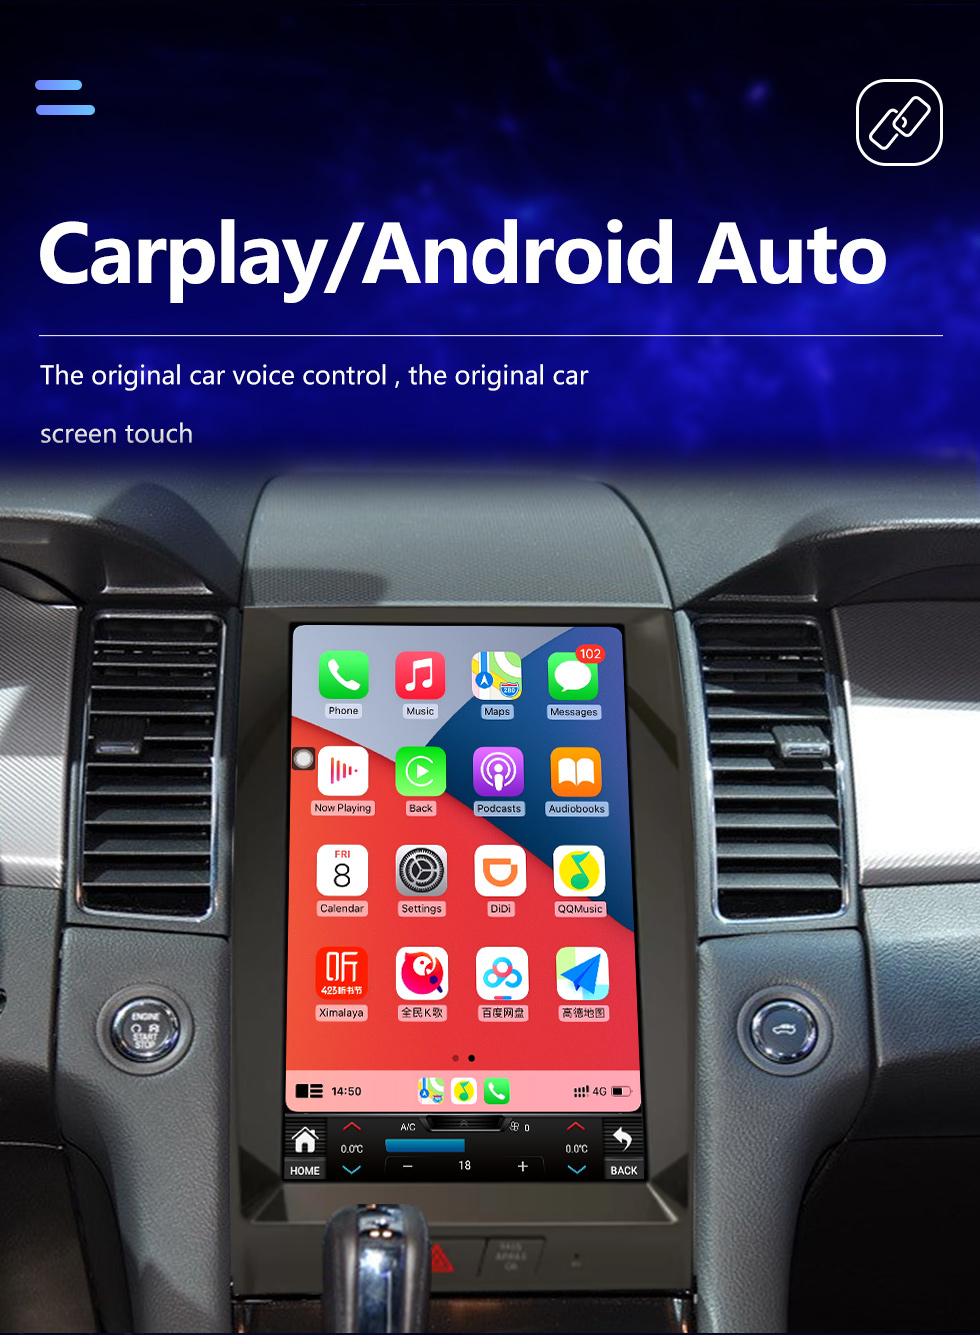 Seicane 13,3 Zoll Android 10.0 HD Touchscreen GPS-Navigationsradio für 2012 2013 2014-2016 TAURUS mit Bluetooth Carplay-Unterstützung TPMS AHD-Kamera